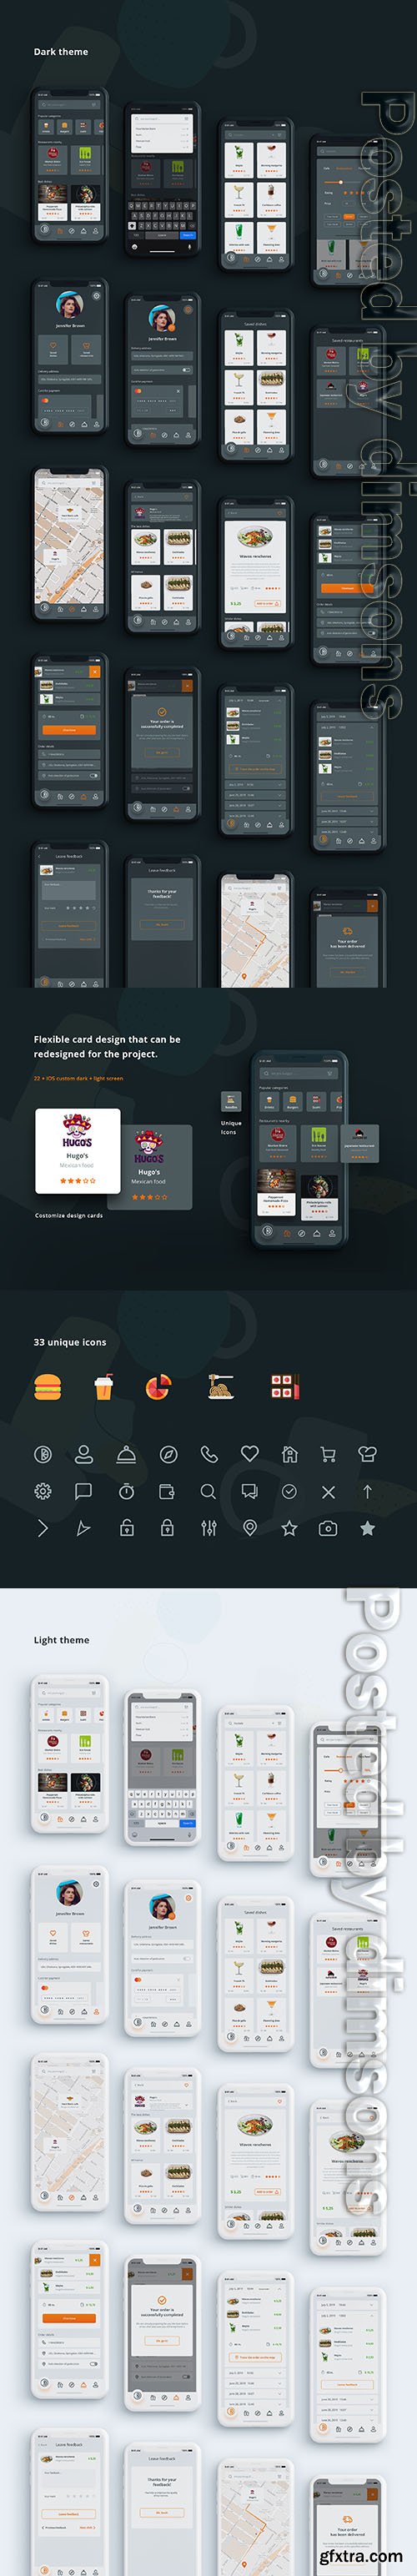 Food Delivery | App IOS design + UI Kit + Mockup + unique icons